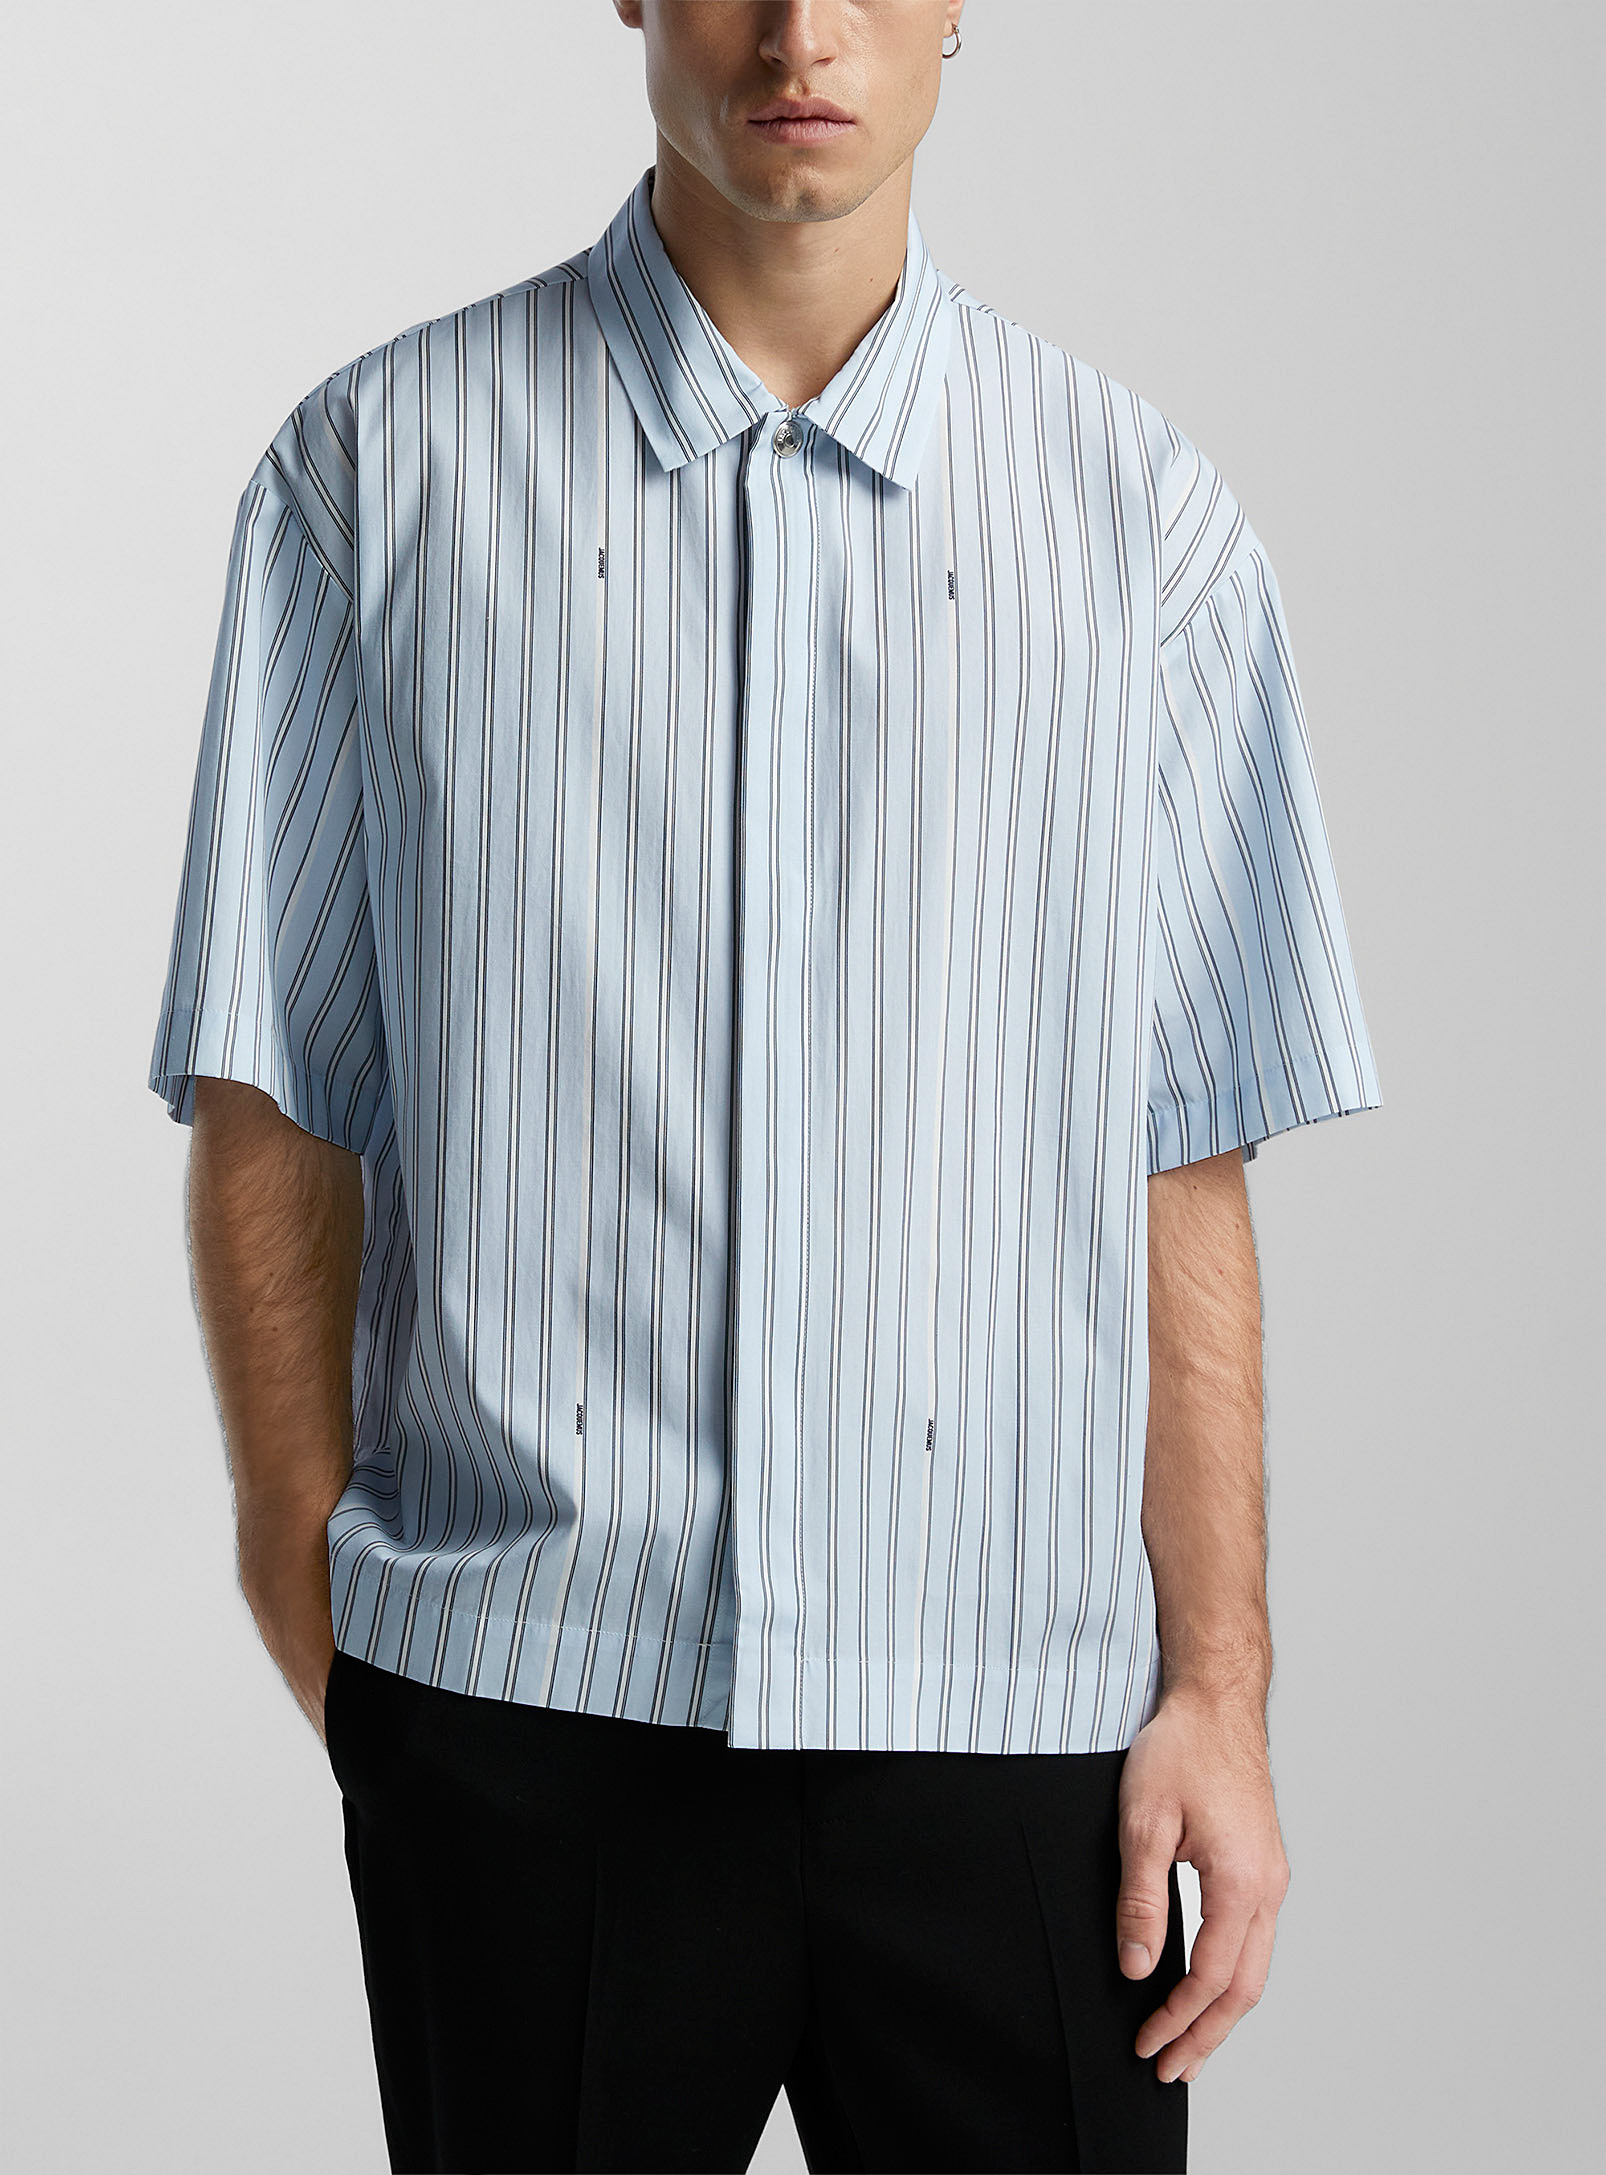 Jacquemus - Men's Signature stripes short sleeve shirt